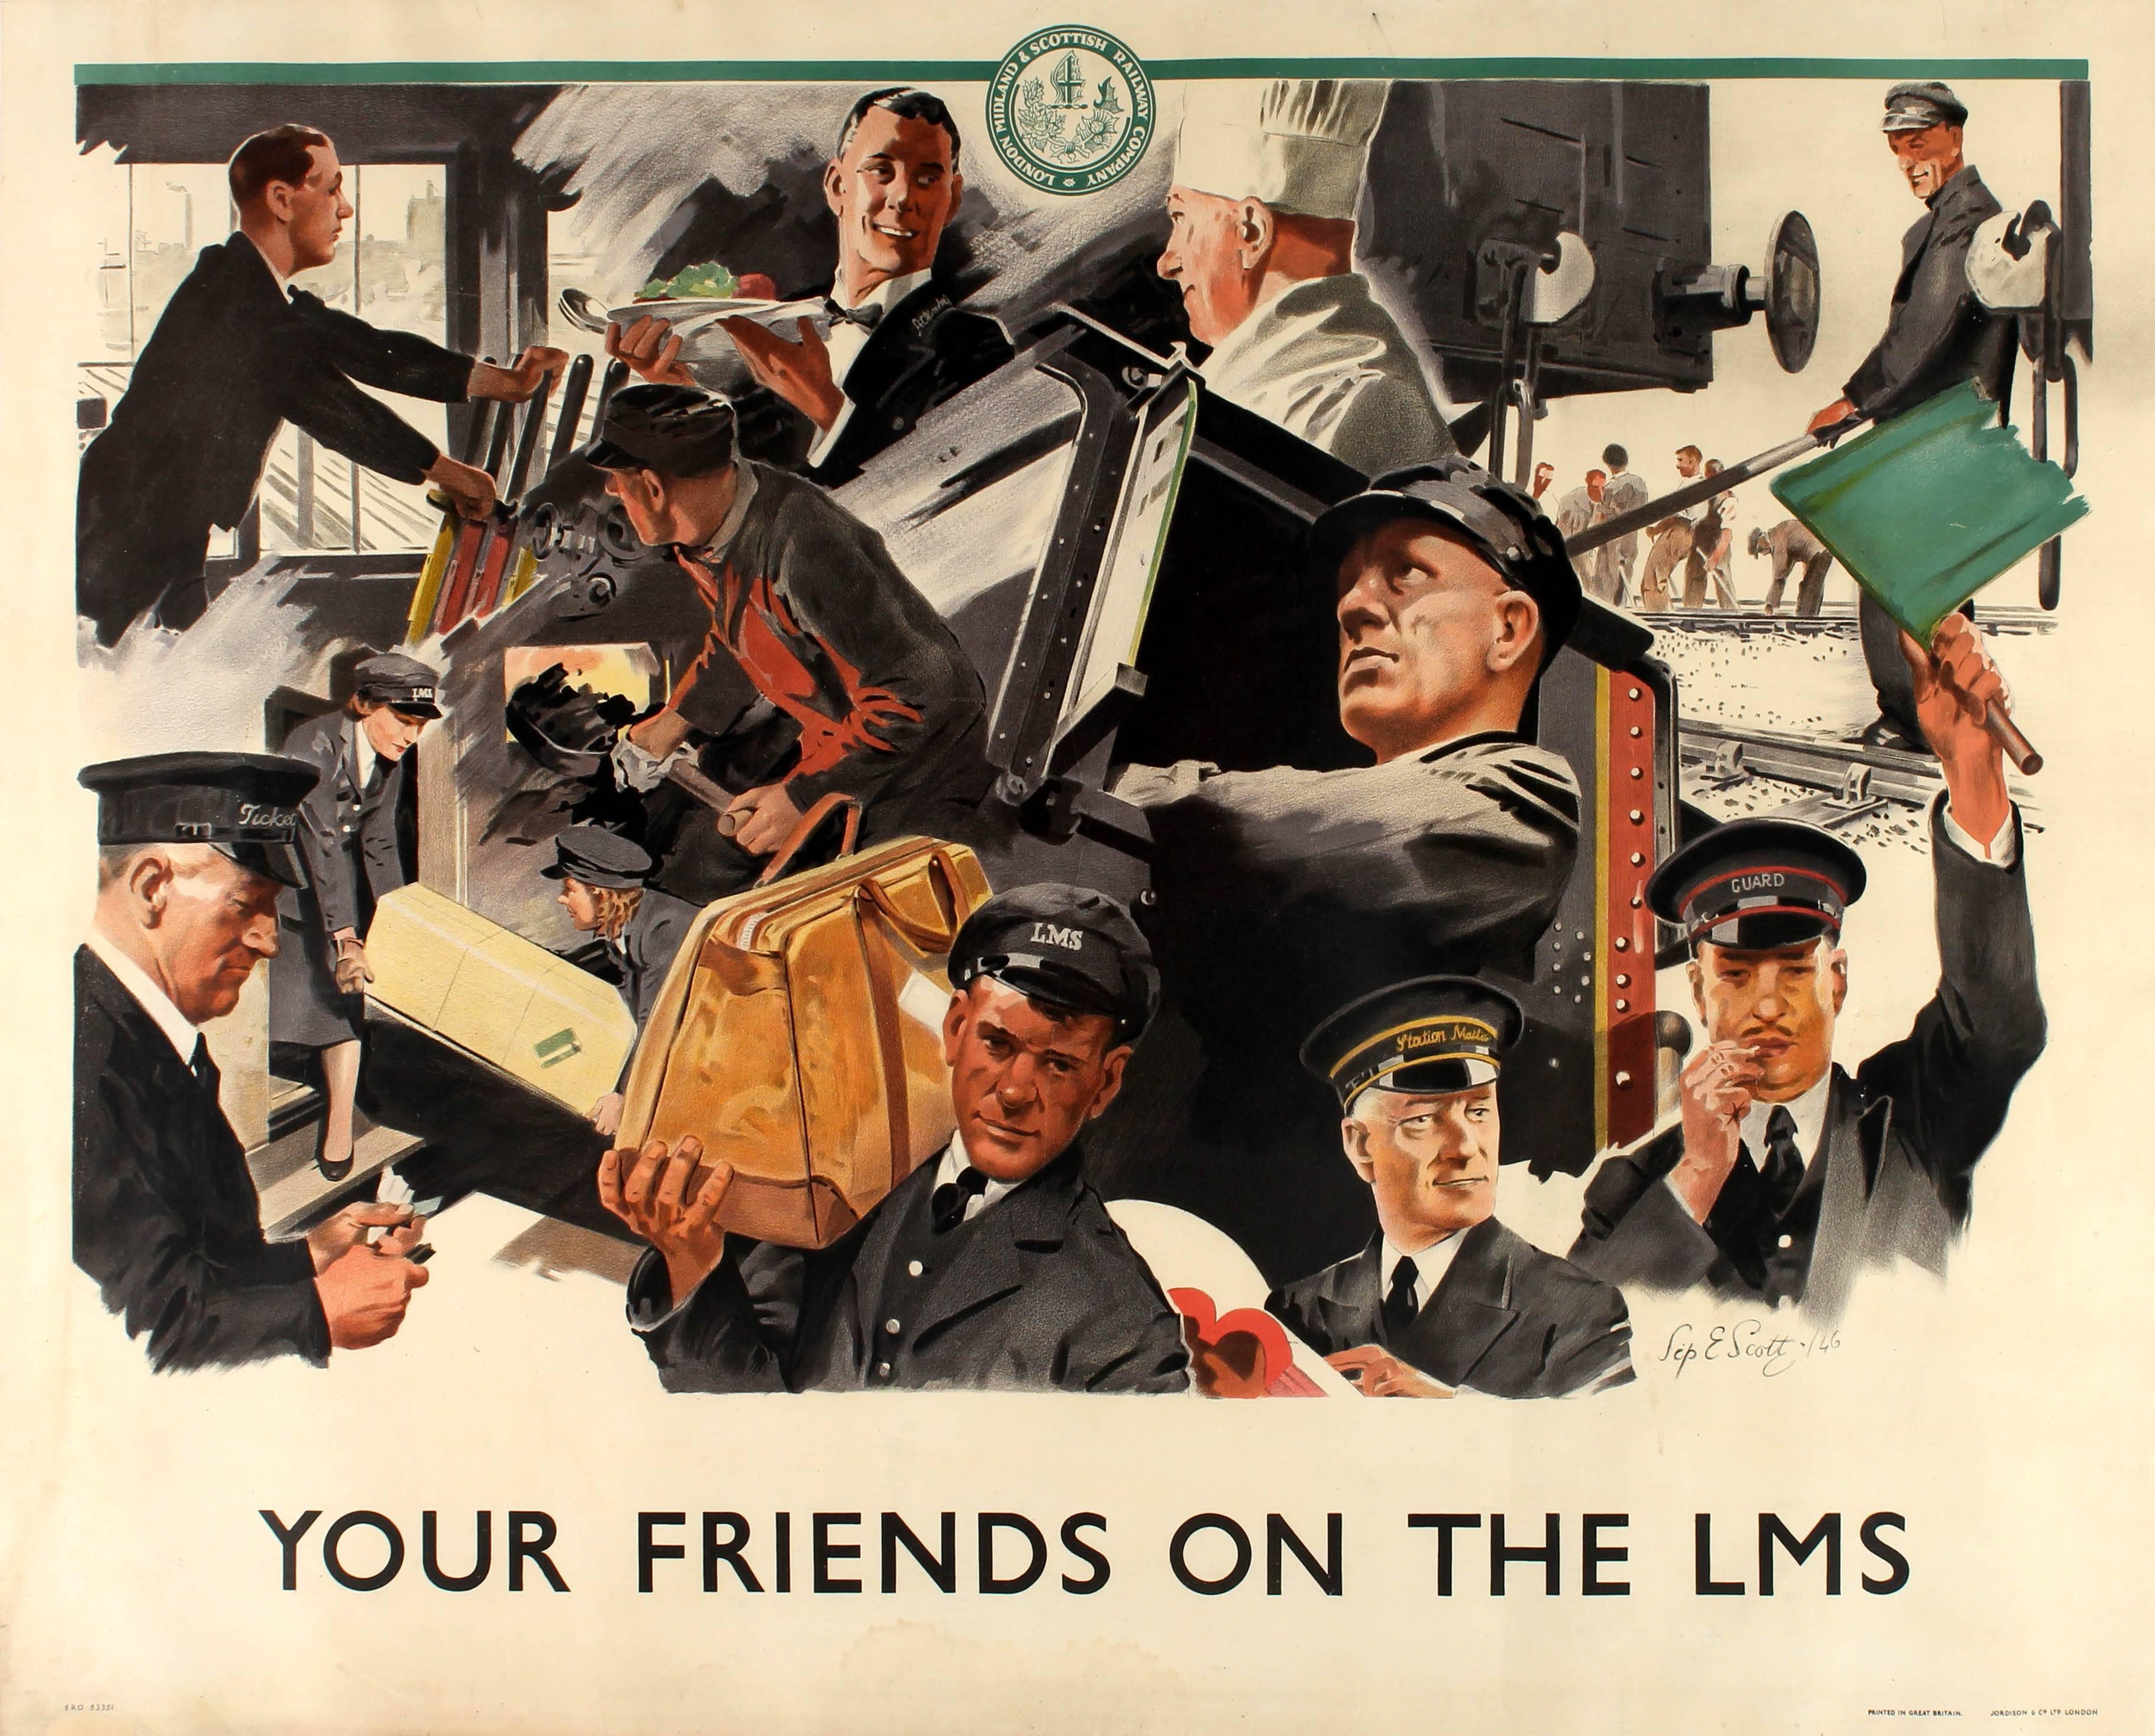 Septimus Edwin Scott Print - Original London Midland And Scottish Railway Poster - Your Friends On The LMS